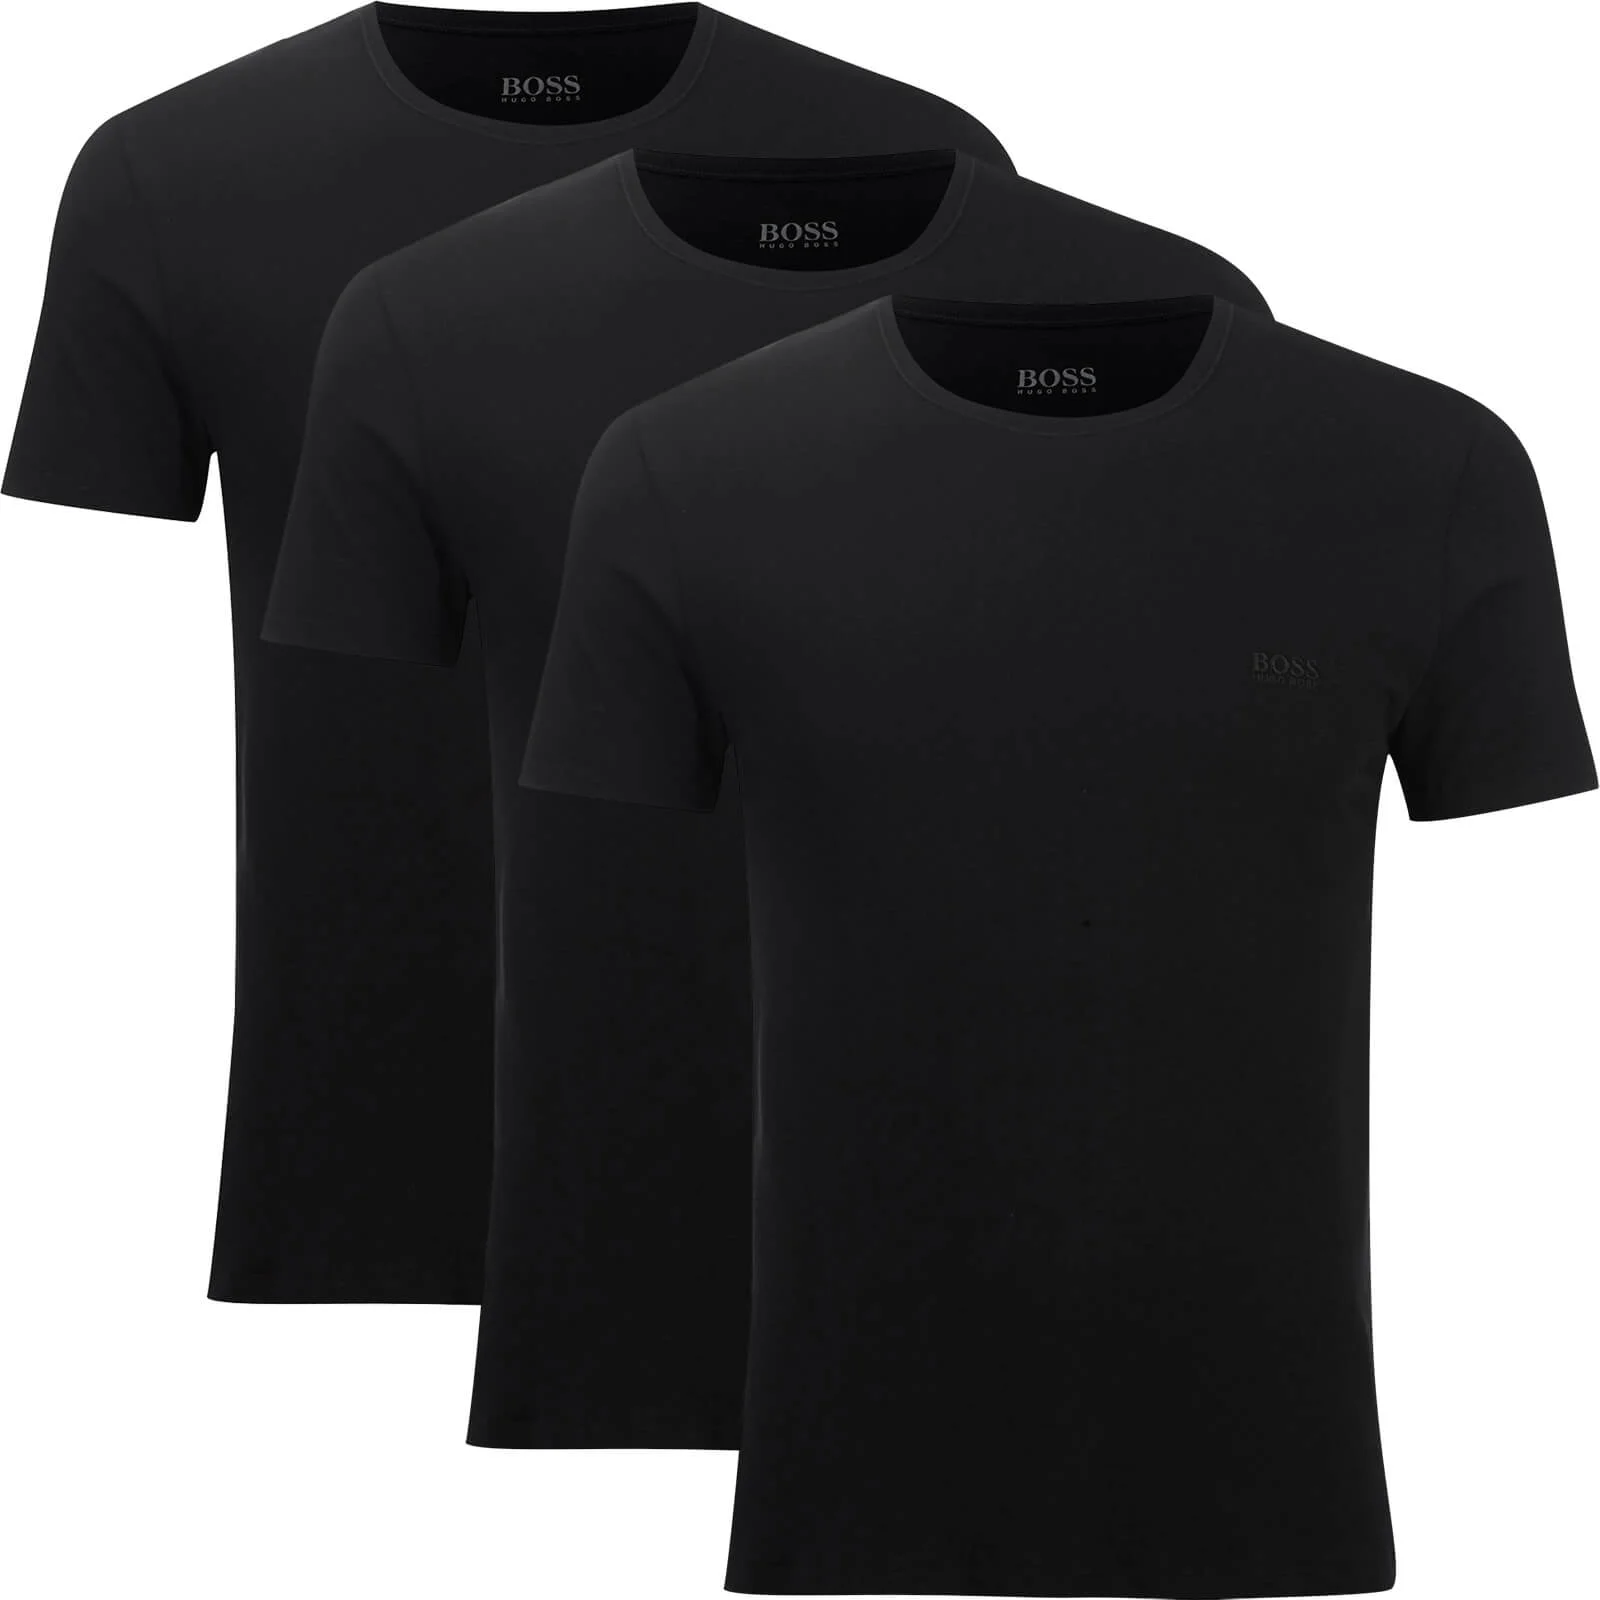 BOSS Men's Three Pack T-Shirts - Black Image 1